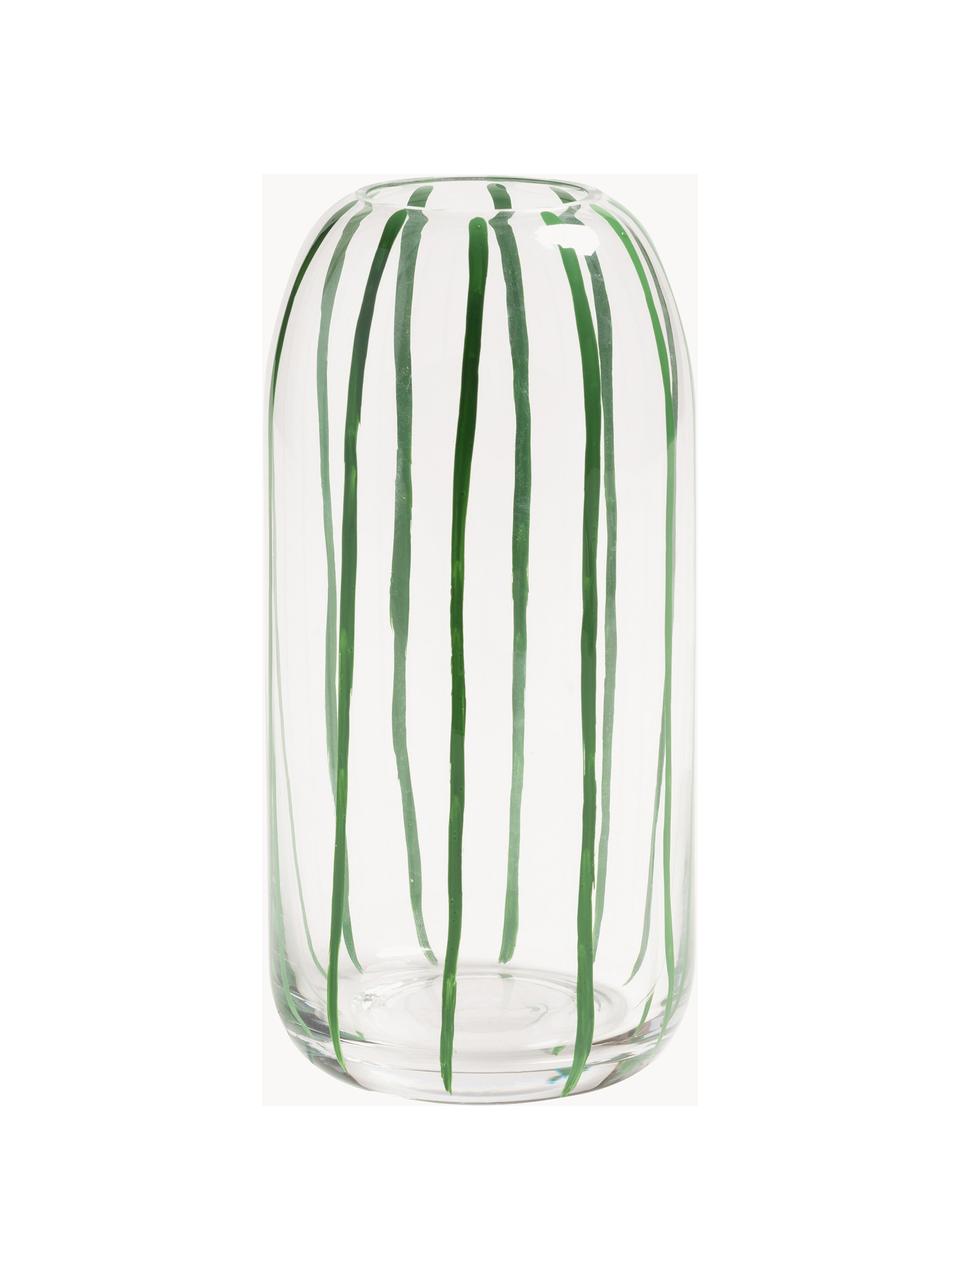 Jarrón artesanal de vidrio Sweep, Vidrio, Transparente, verde oscuro, Ø 10 x Al 21 cm